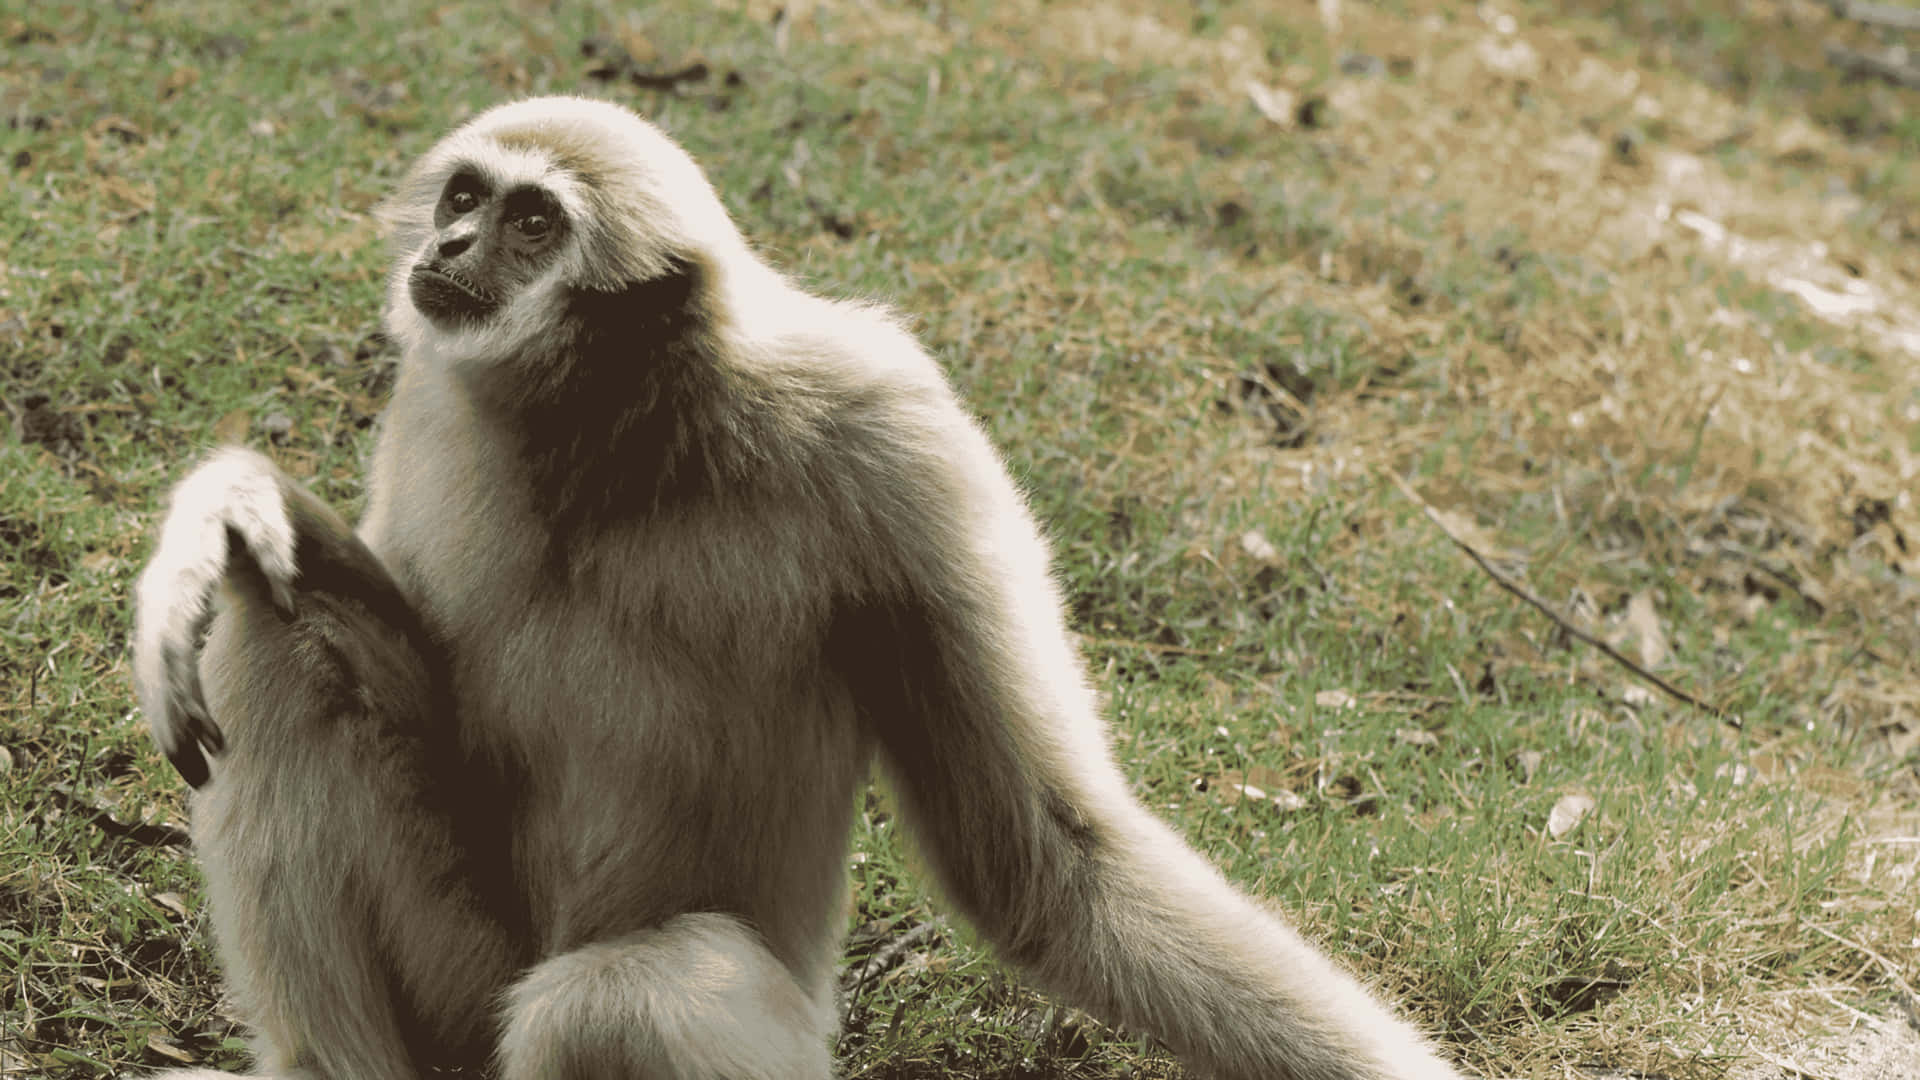 4kbakgrundsbild Av En Gibbon Som Tittar Uppåt